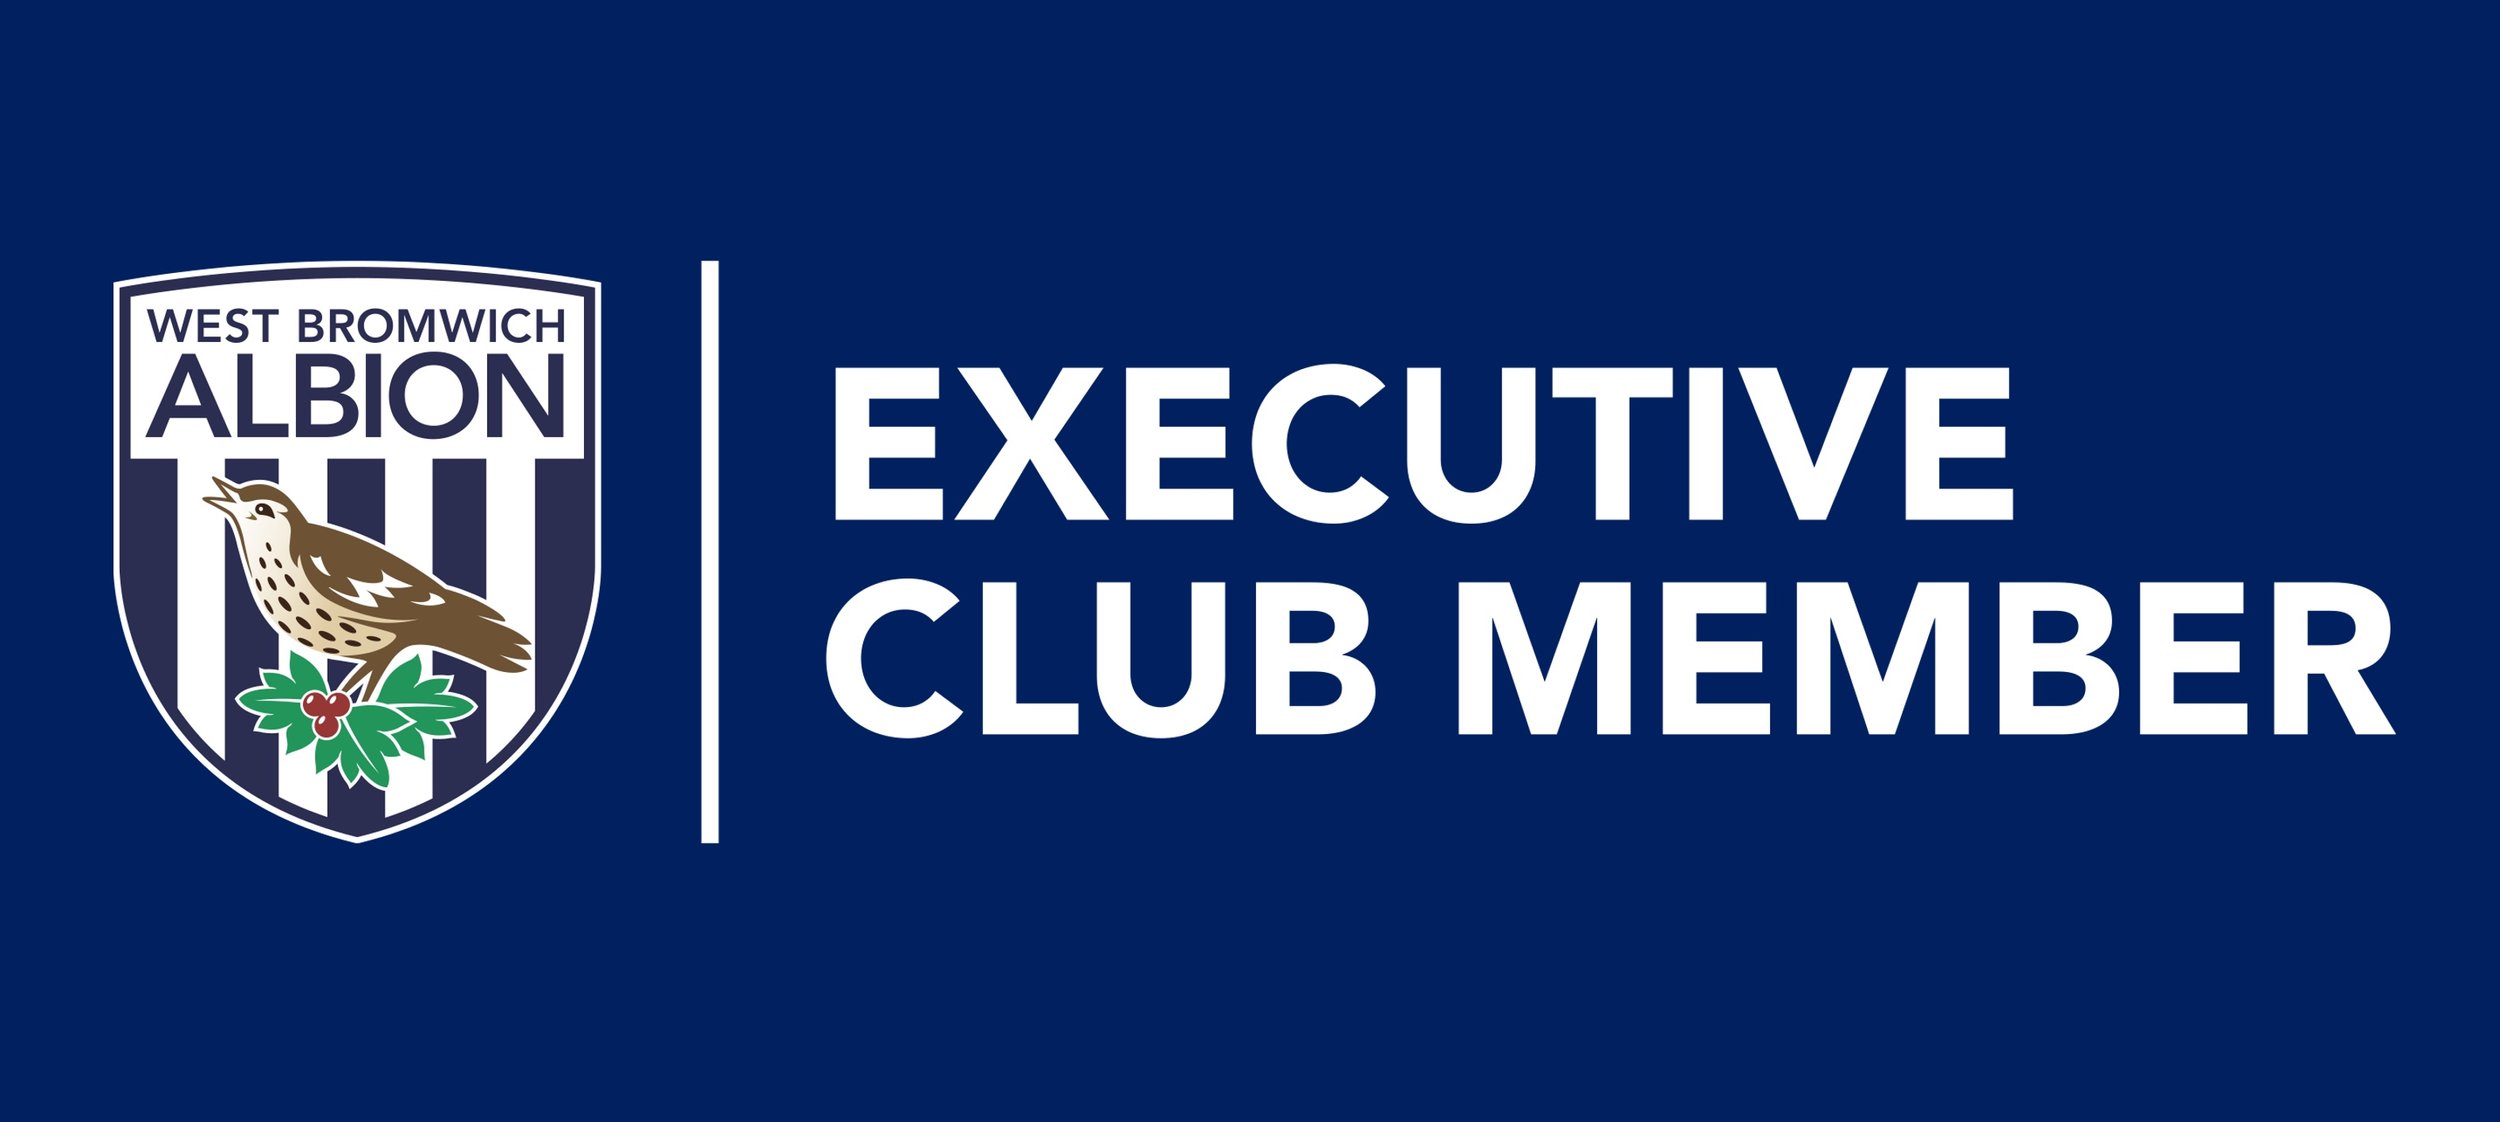 Executive Club logo[1].jpg